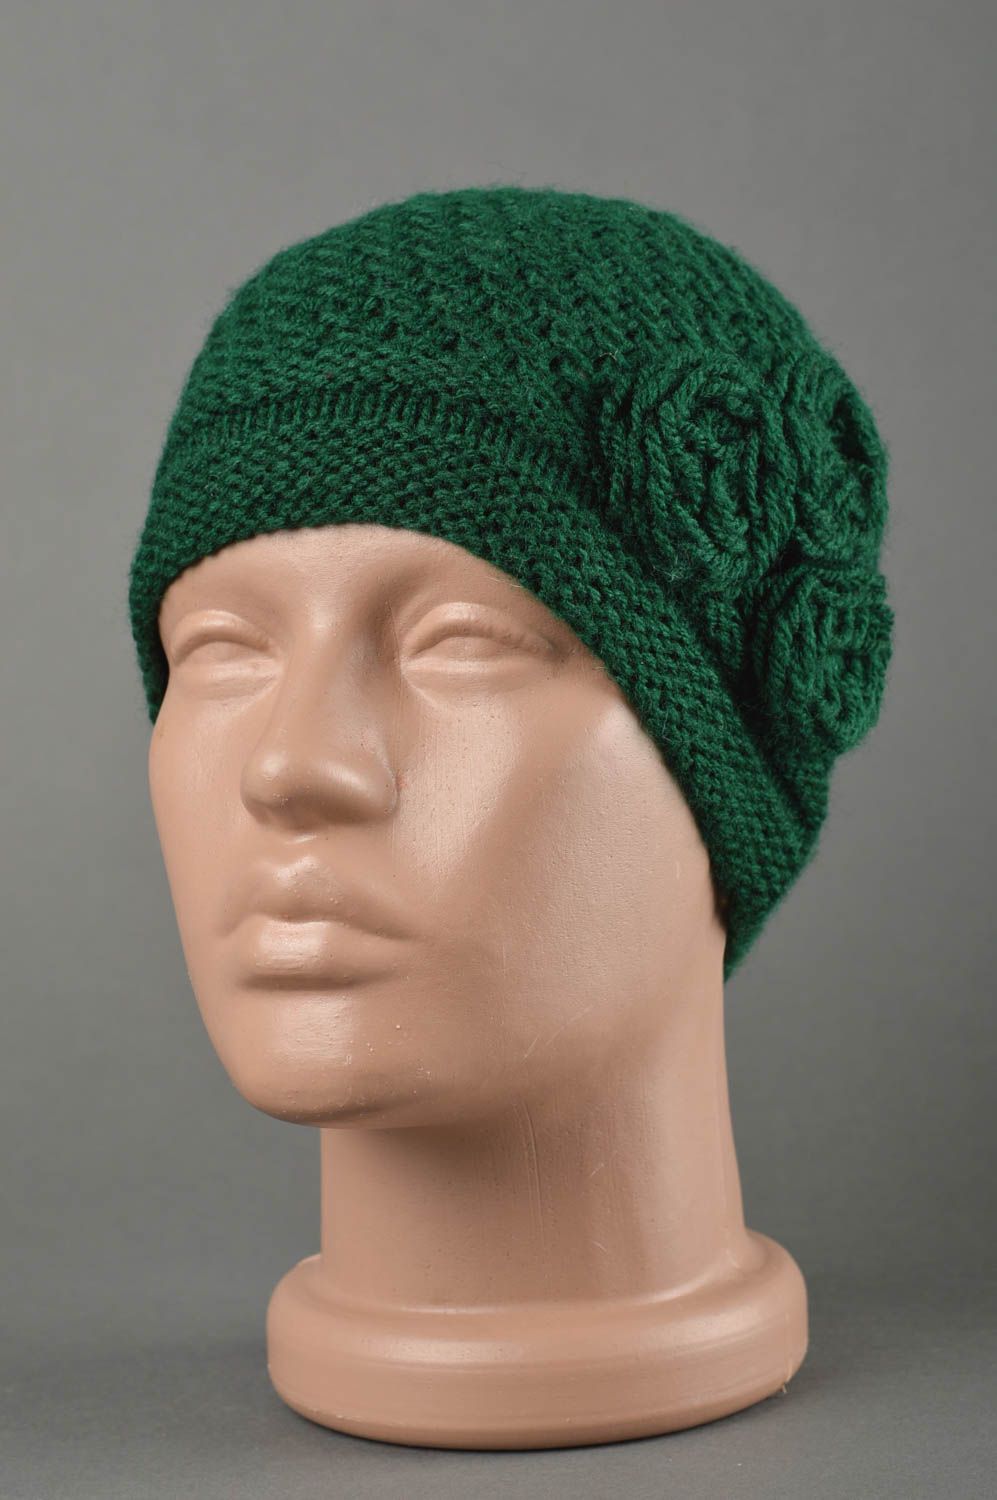 Handmade crochet hat winter hat crochet hats for kids accessories for girls photo 1